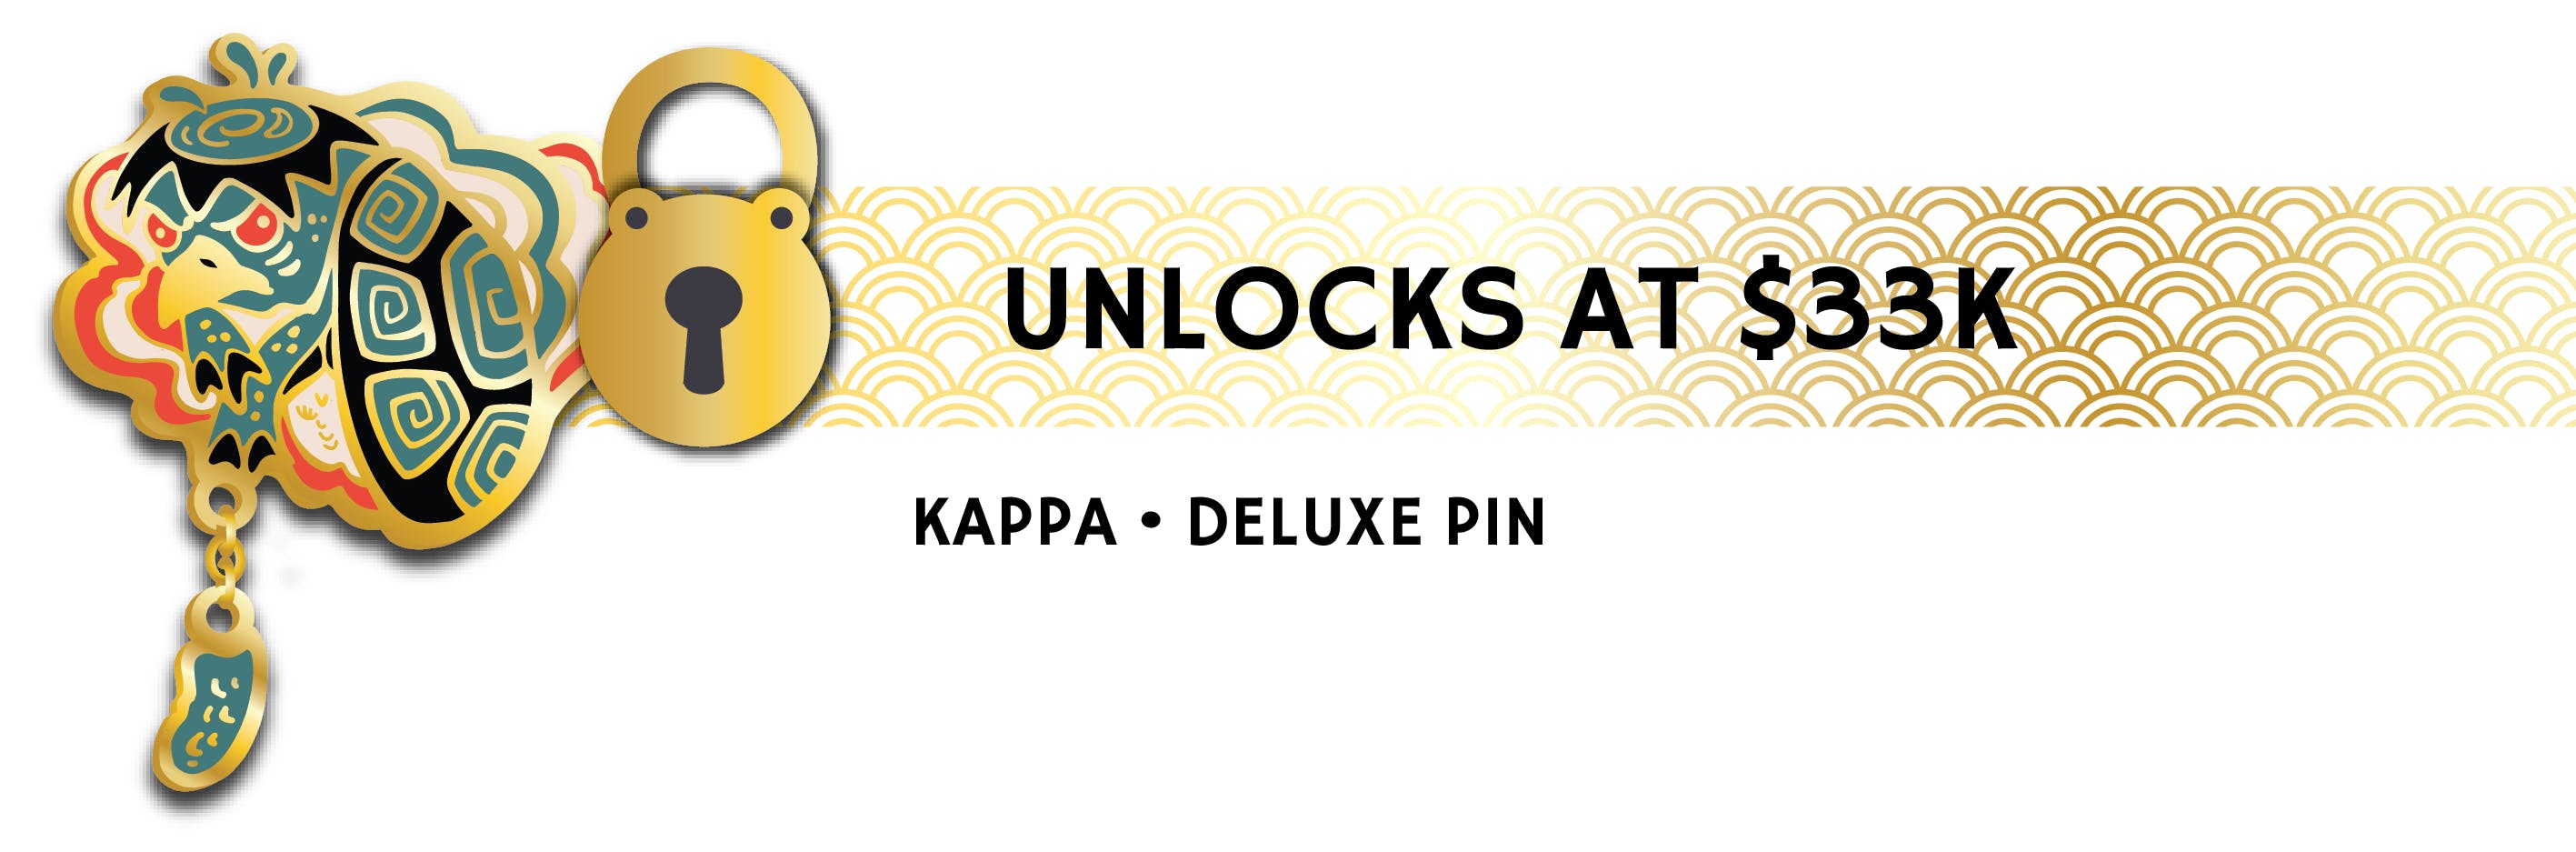 Stretch Goal #11: Unlock the Kappa